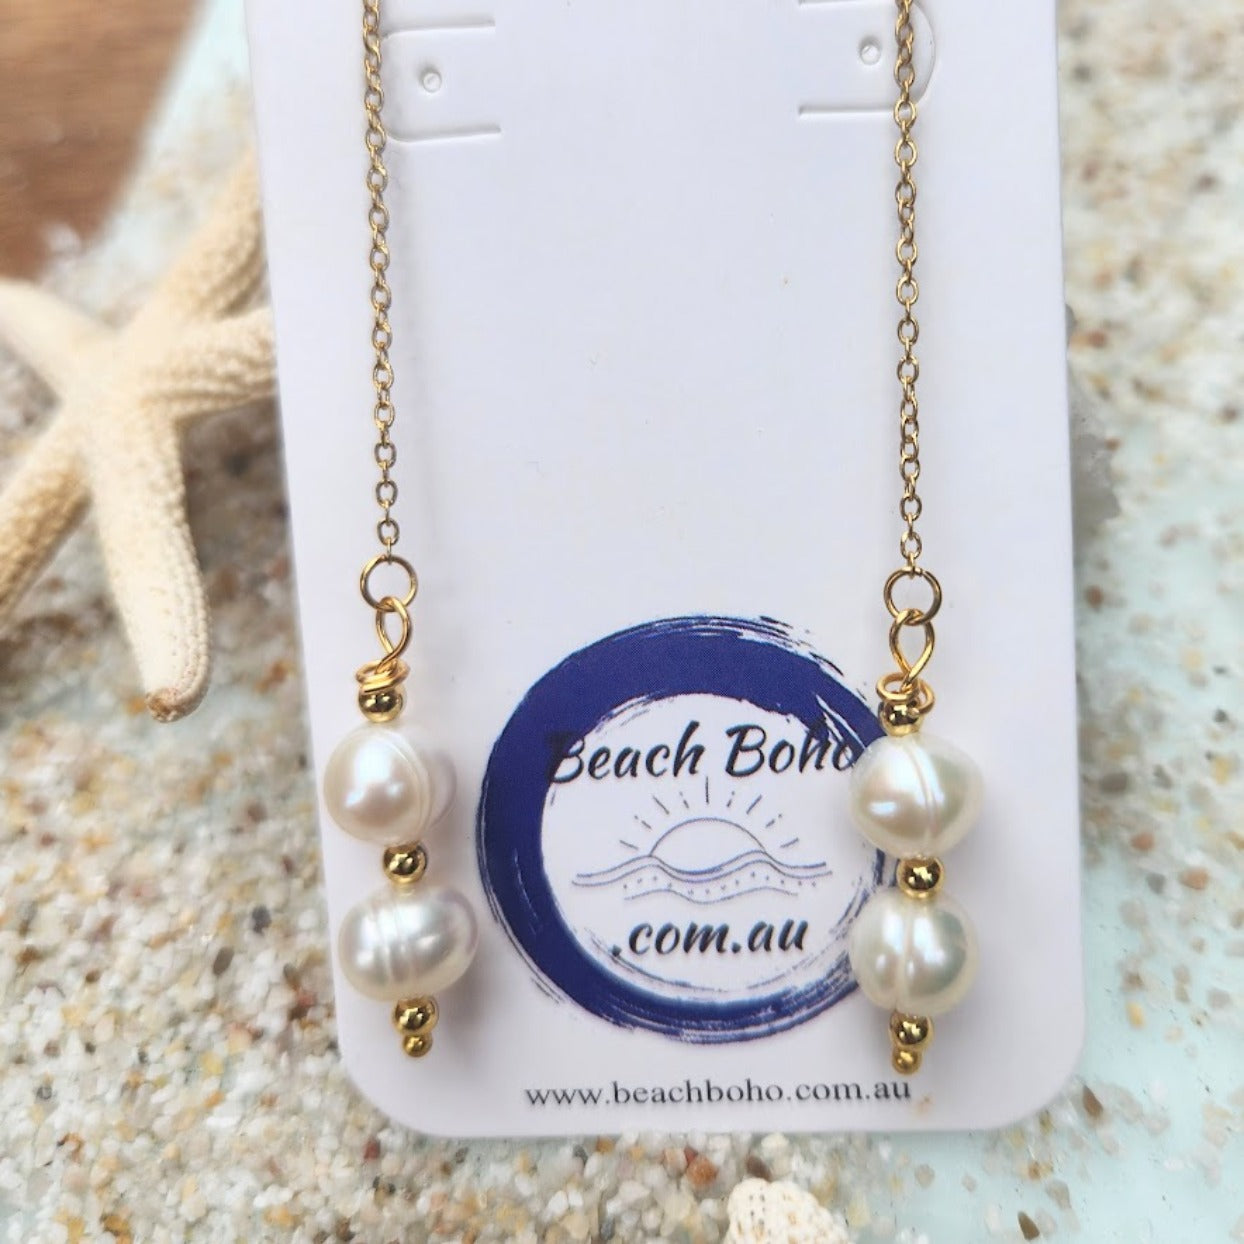 DOUBLE BAROQUE WHITE PEARL GOLD THREAD EARRINGS - Premium earrings from www.beachboho.com.au - Just $55! Shop now at www.beachboho.com.au